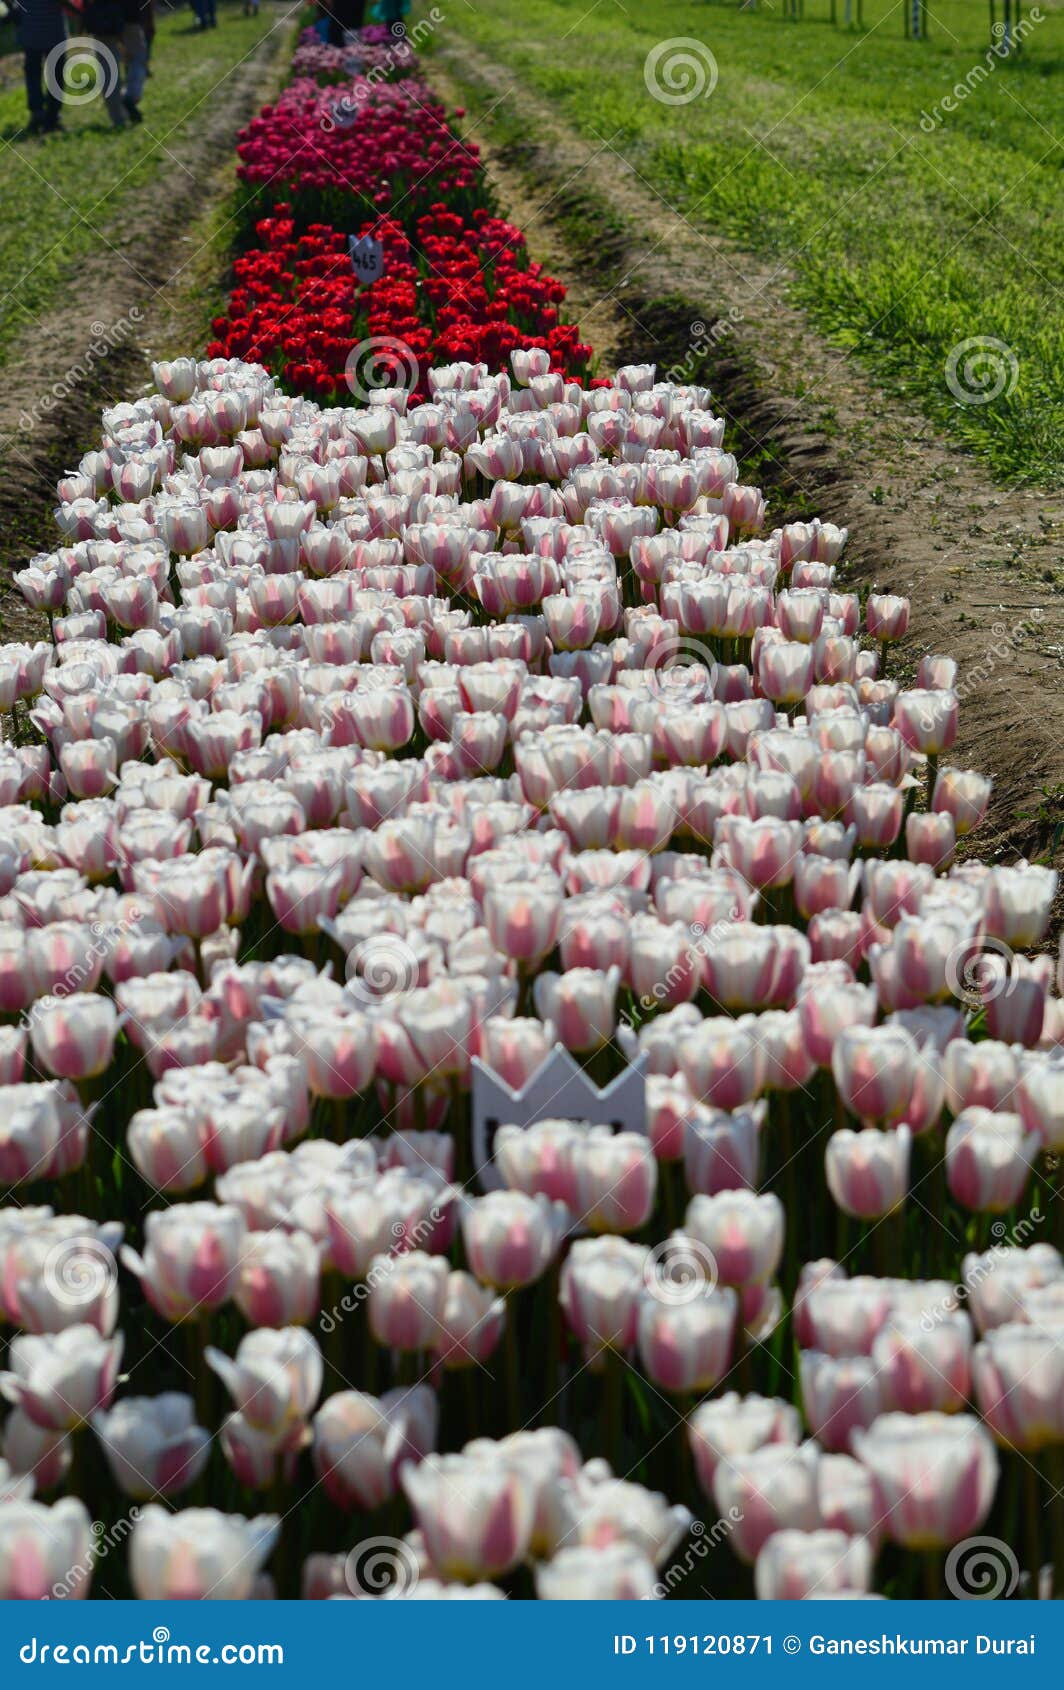 Aristocrat Tulips At Veldheer Tulip Garden In Holland Stock Image